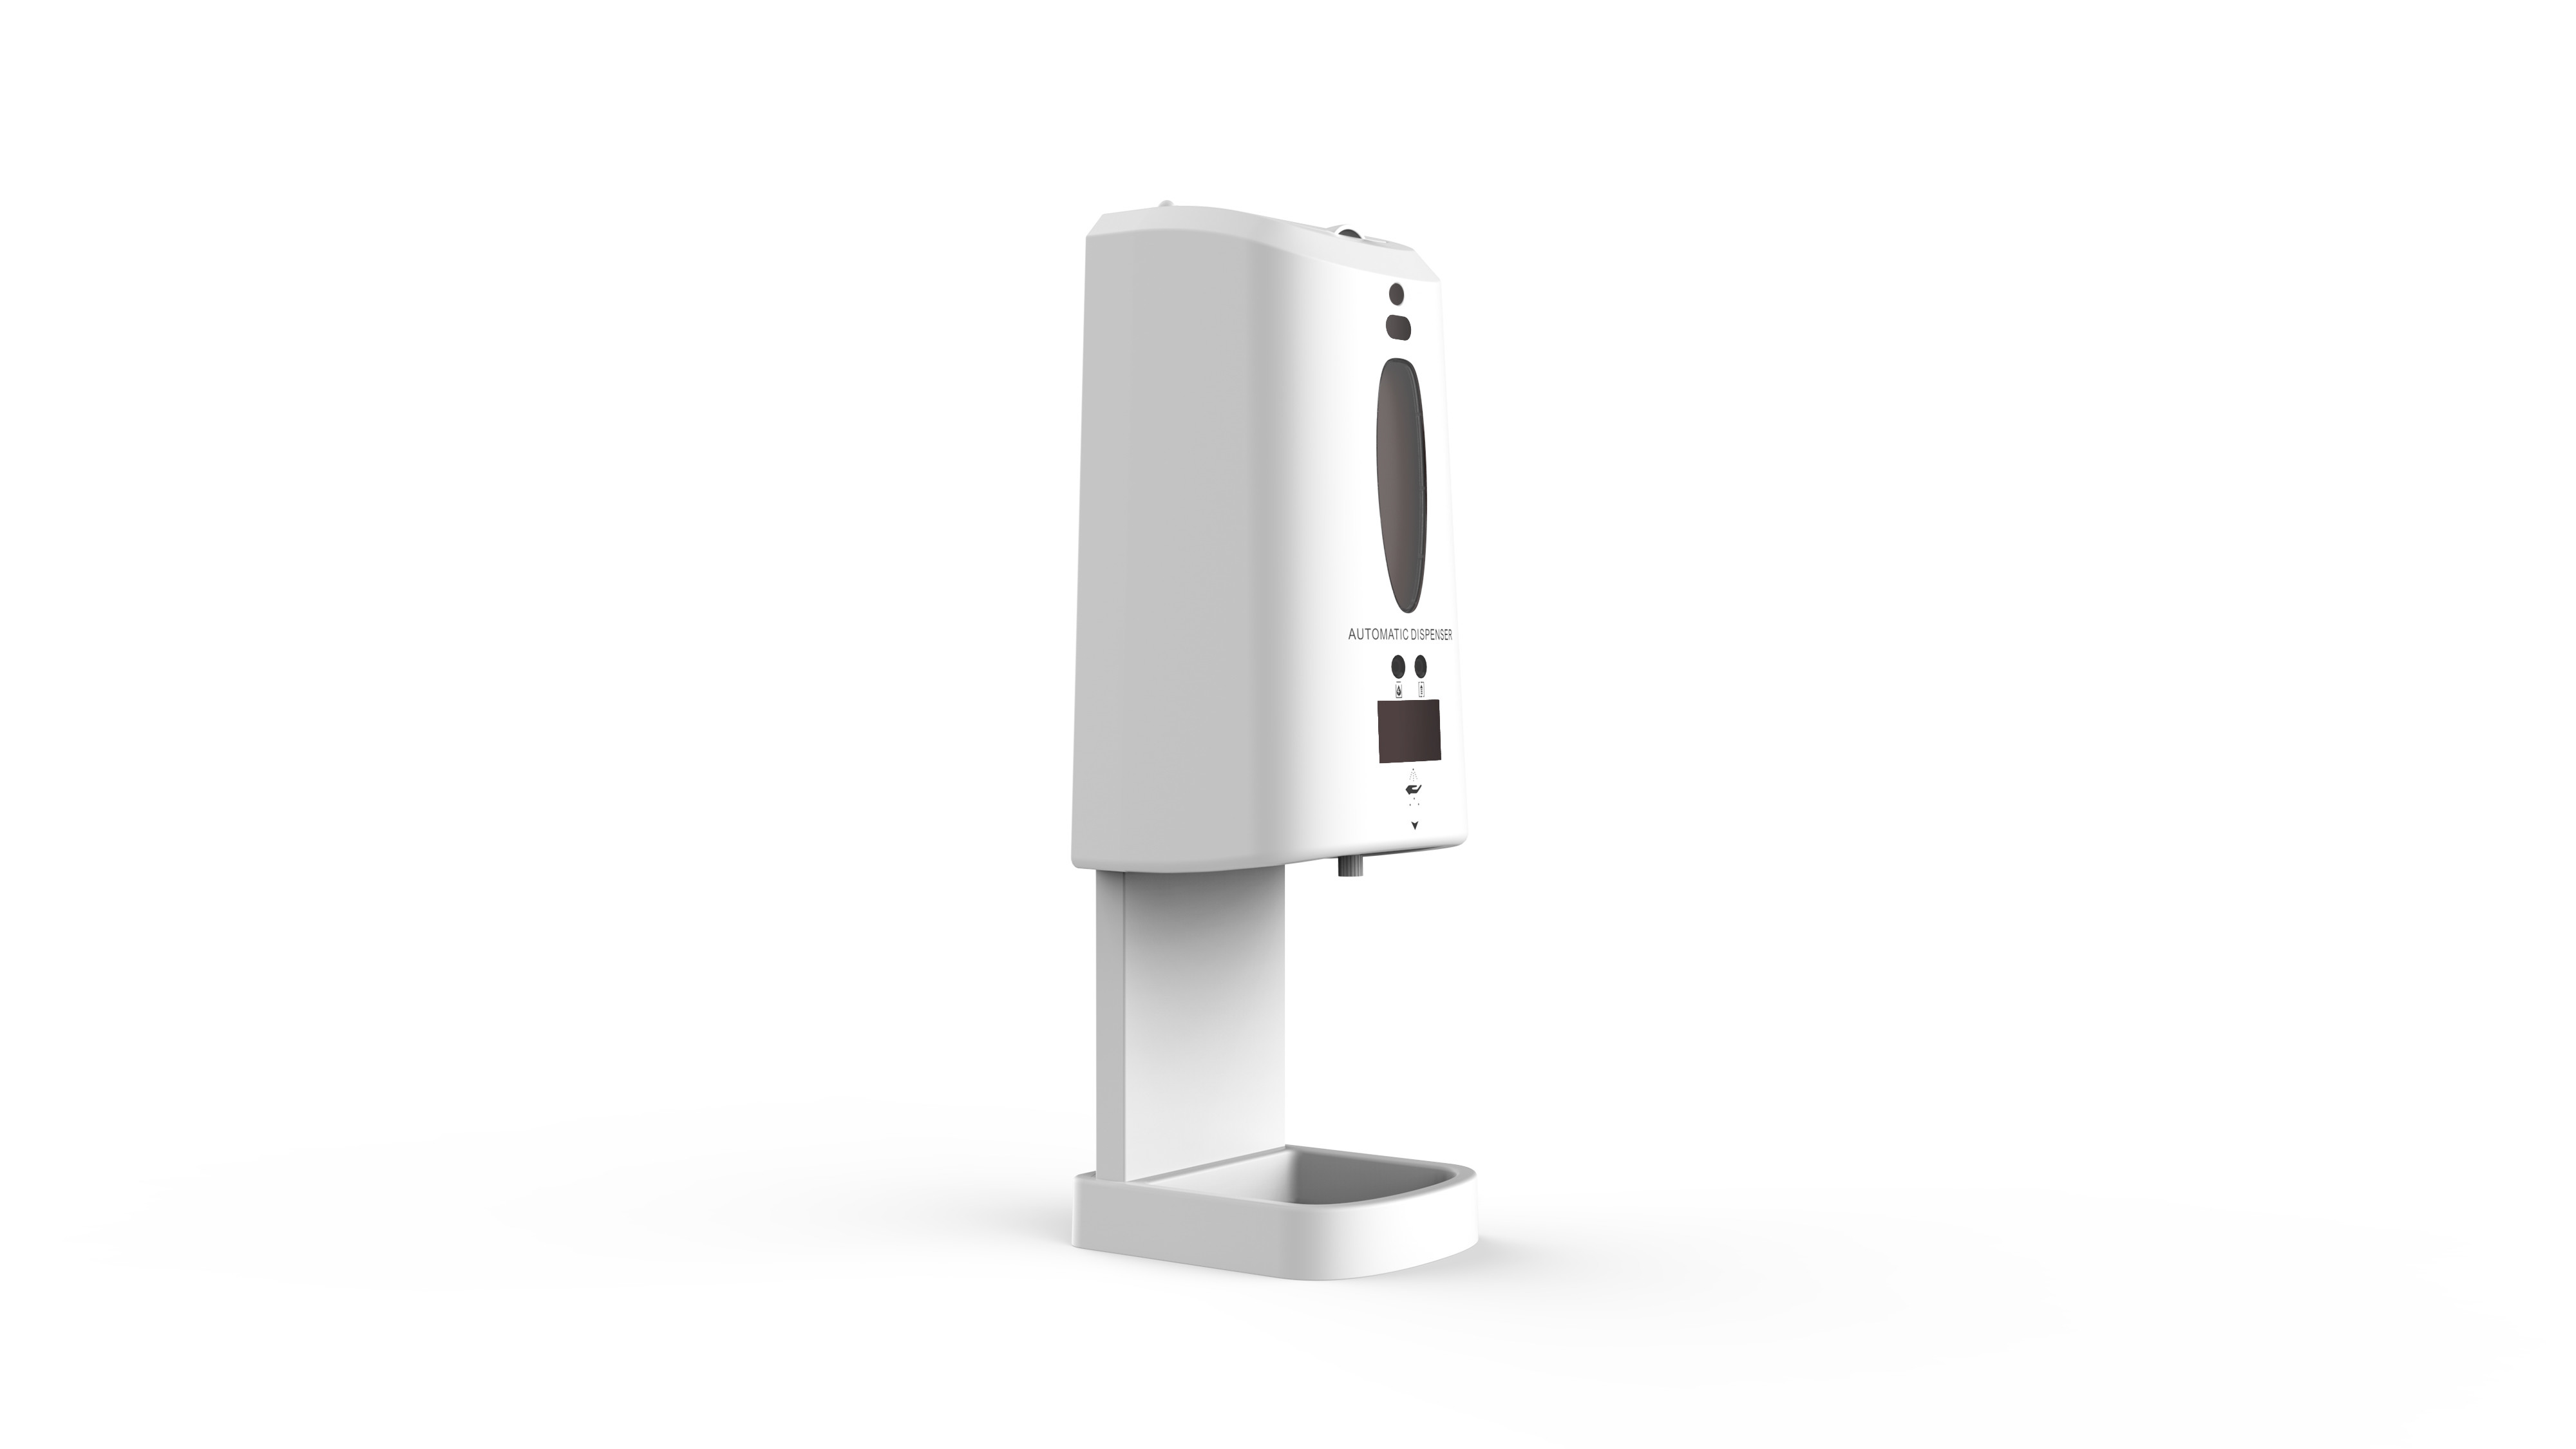 China Hotel Hospitol Sensor Custom Wall Mount Automatic Soap Dispenser Liquid Alcohol Disinfectant on sale